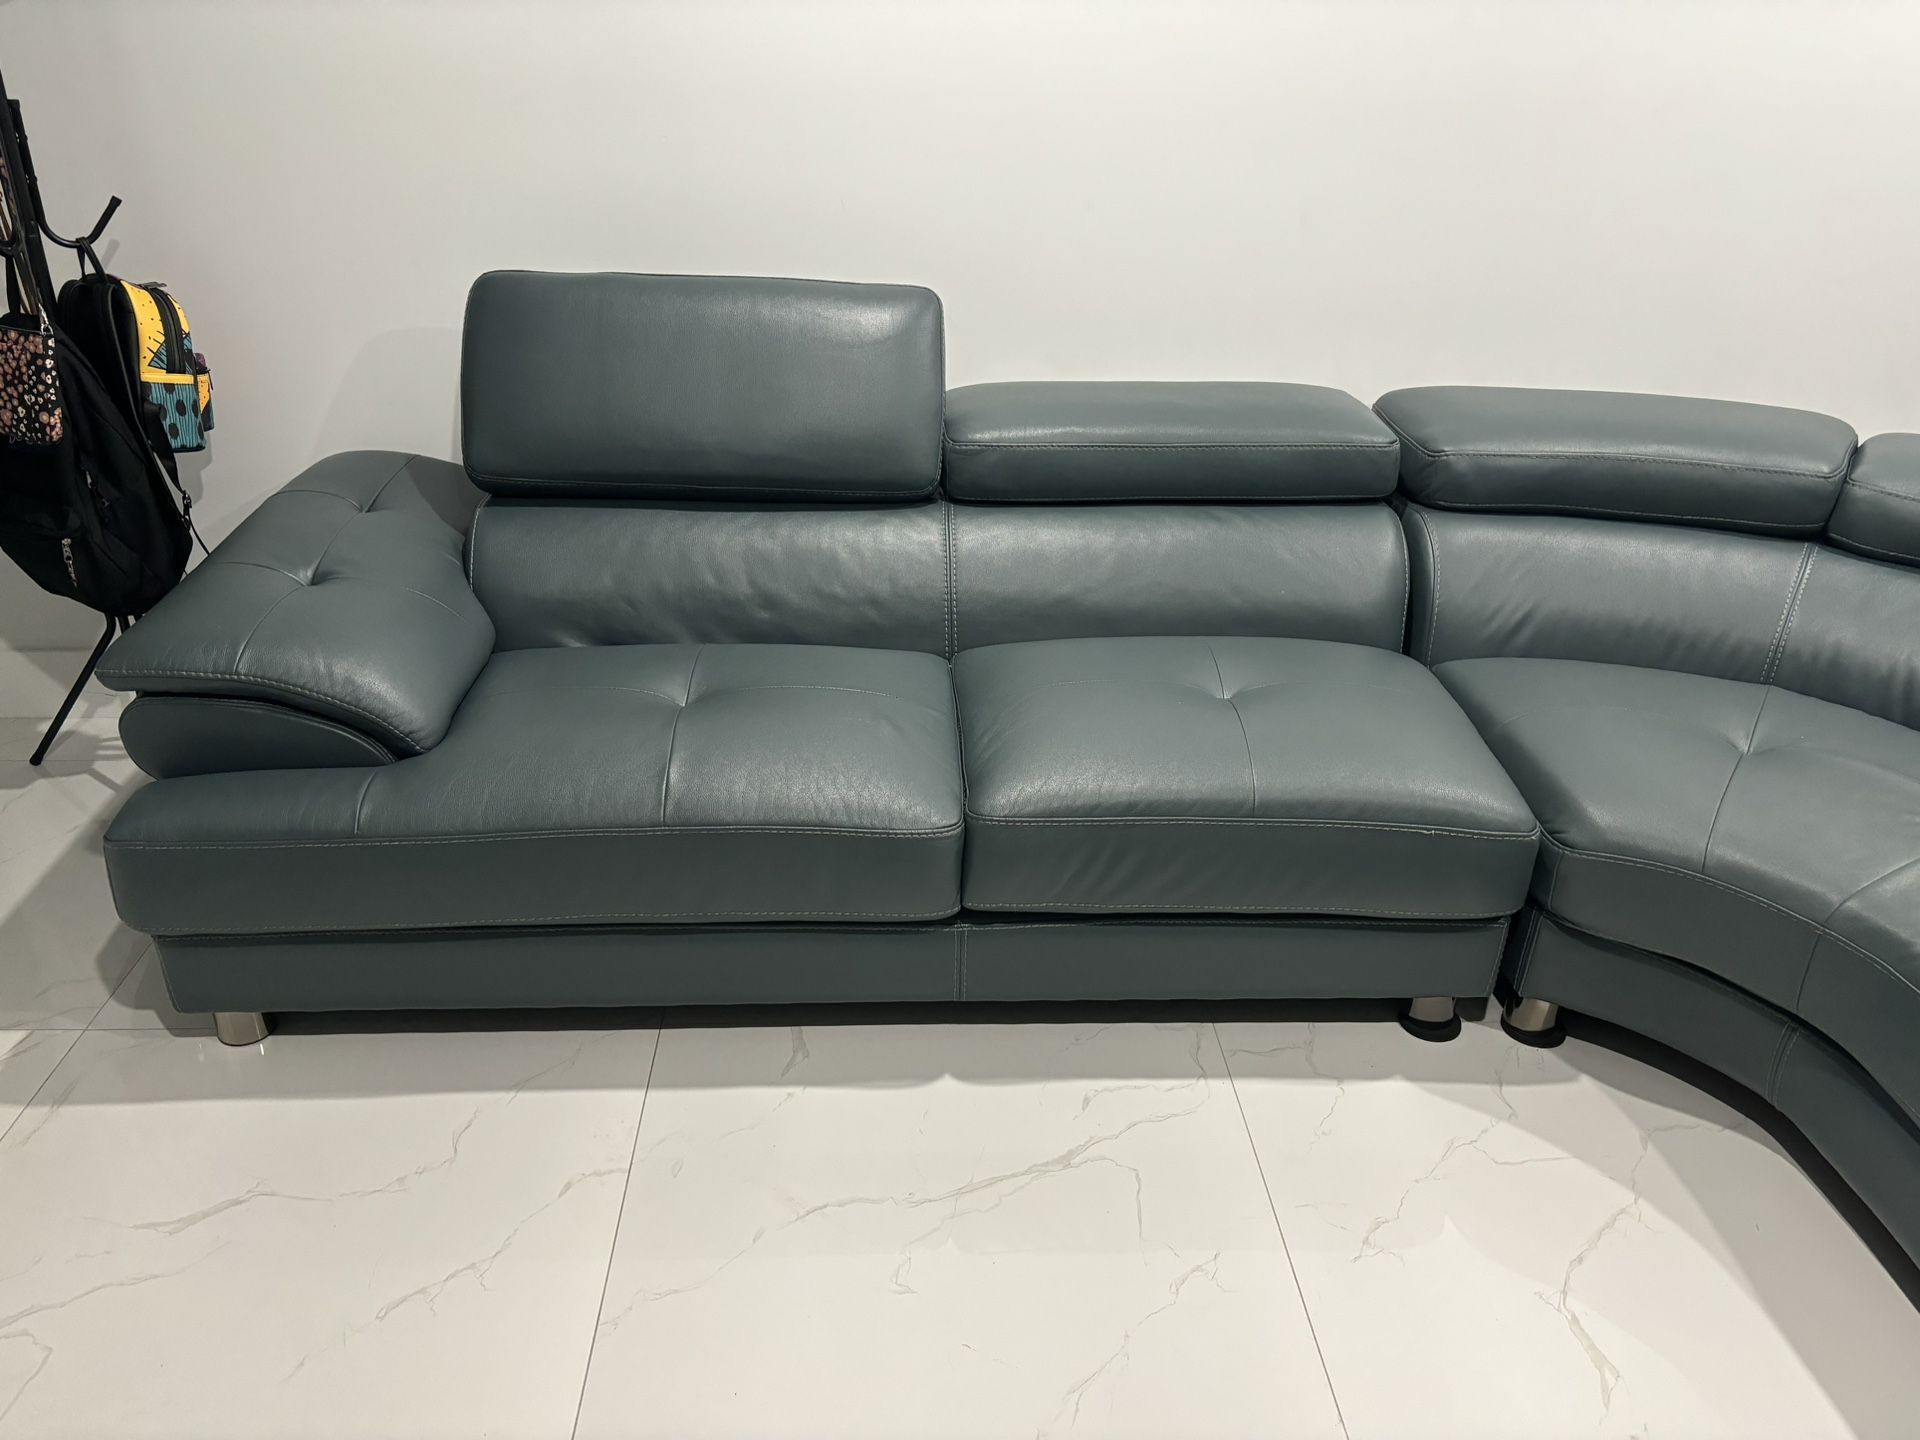 Sofa For Sale. Like New. 